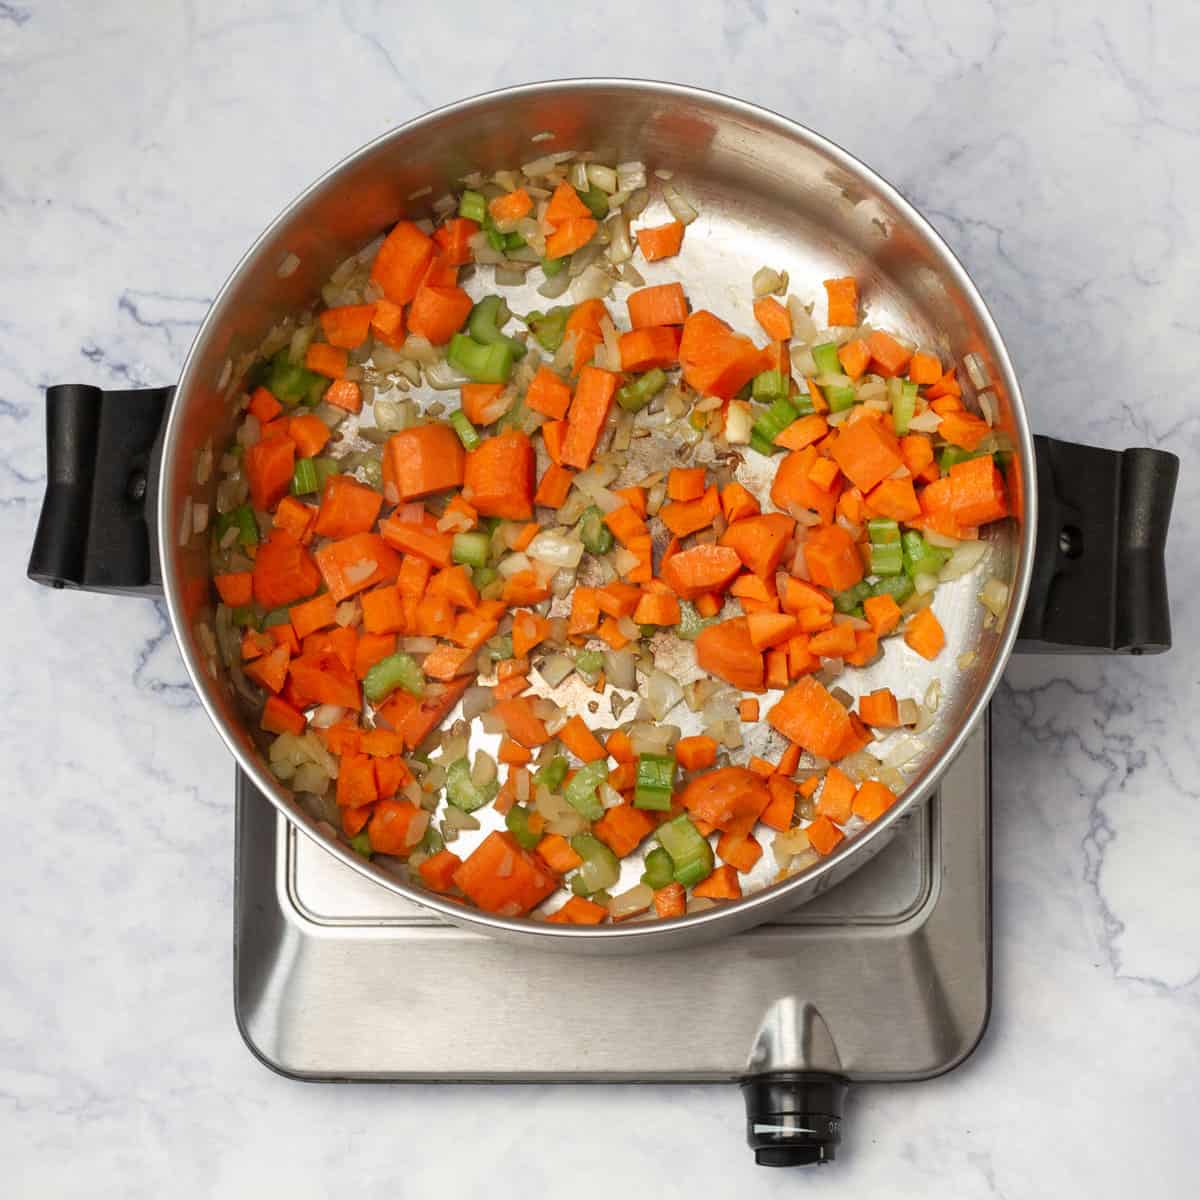 Cooking vegetables in a saucepan